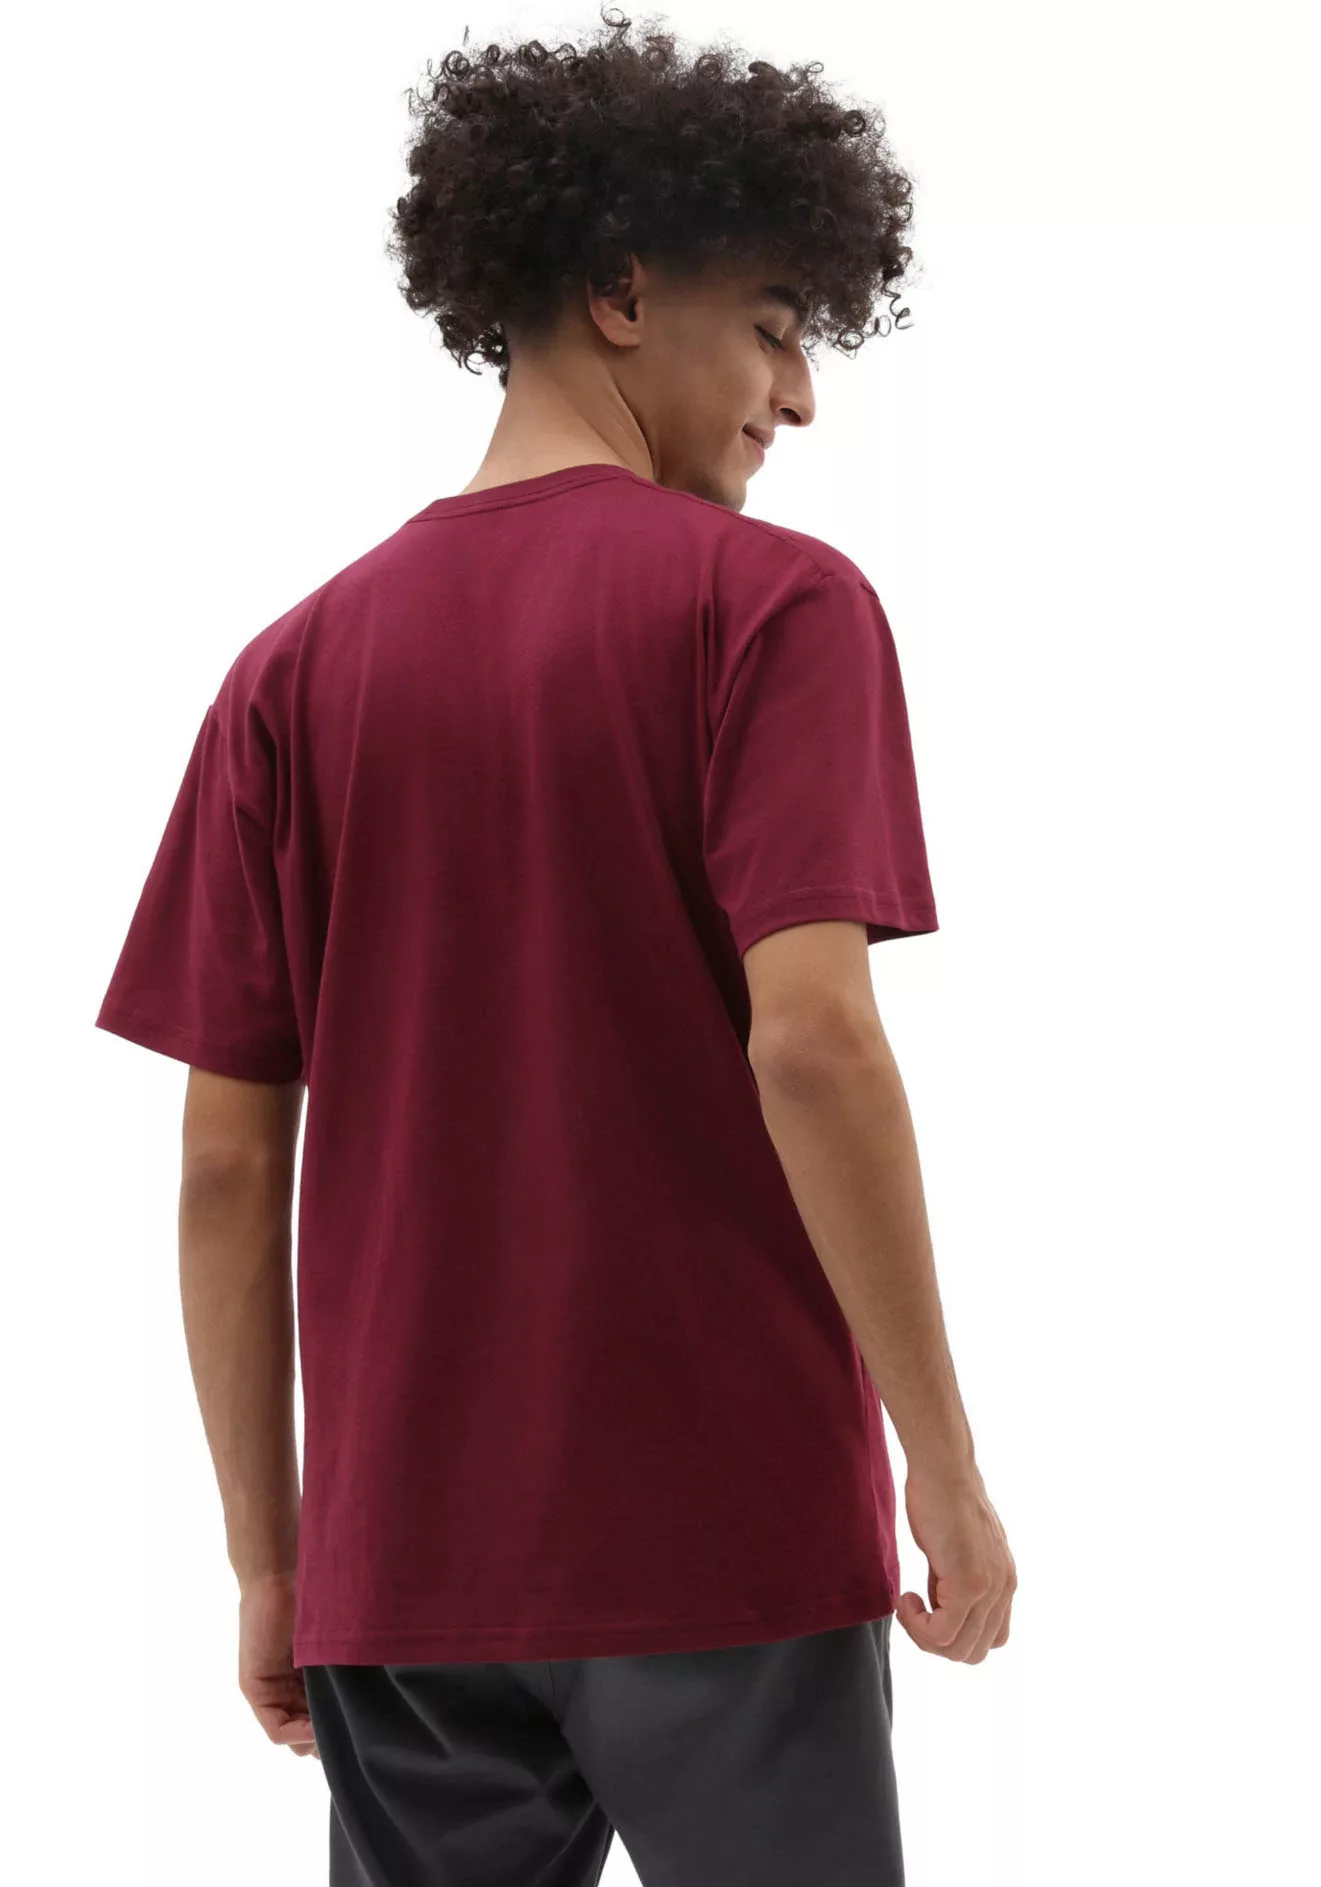 Vans T-Shirt "MN VANS CLASSIC" günstig online kaufen